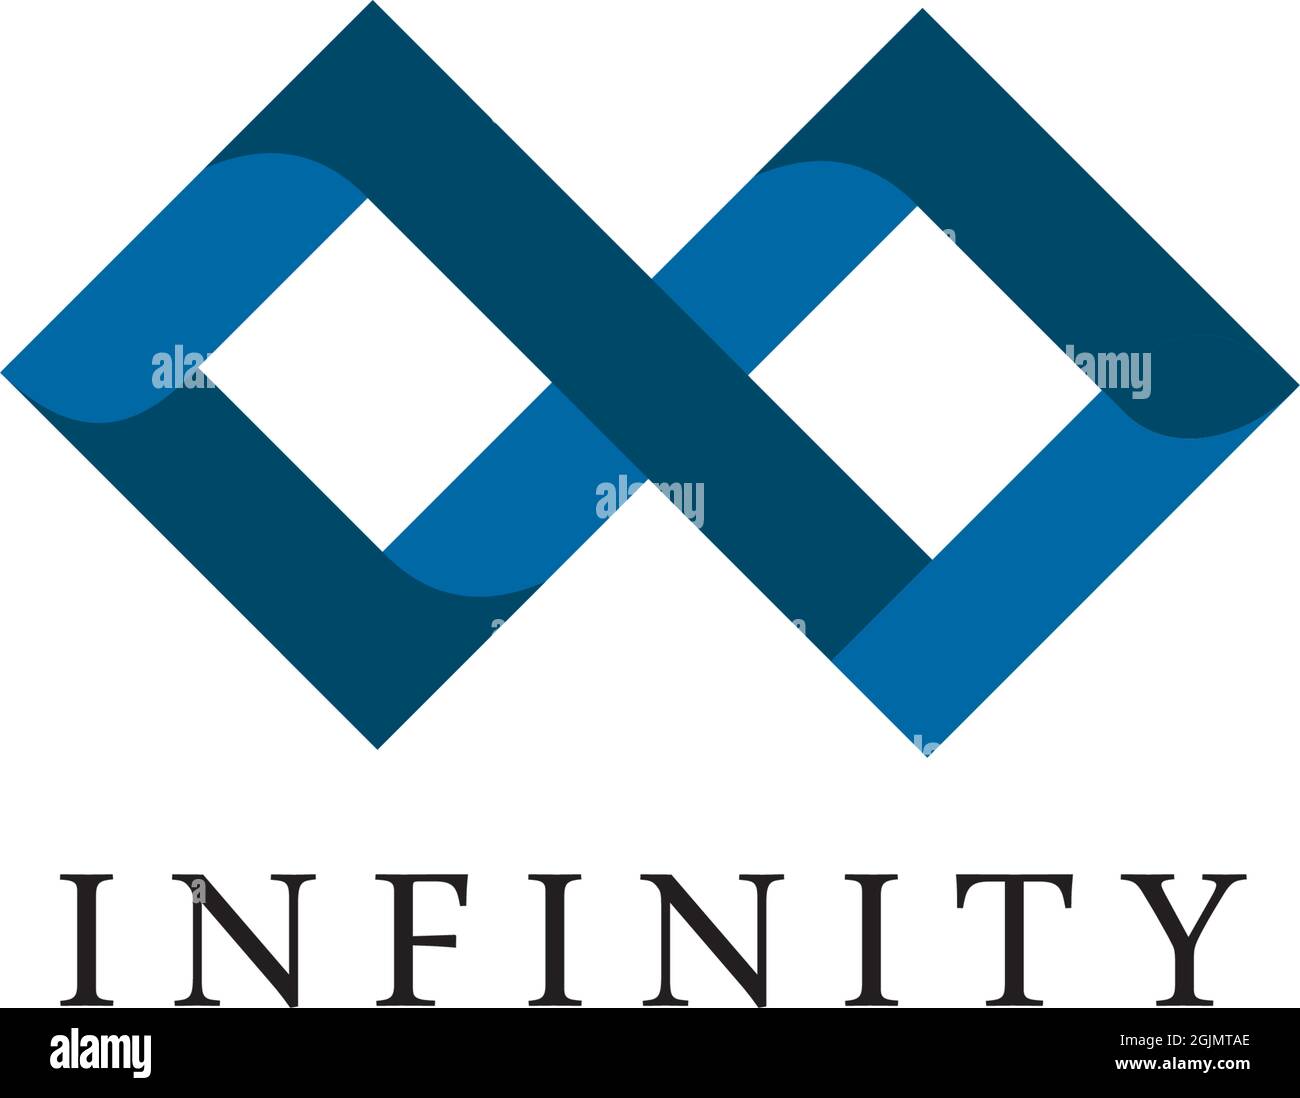 Infinity logo design vector template illustration Stock Vector